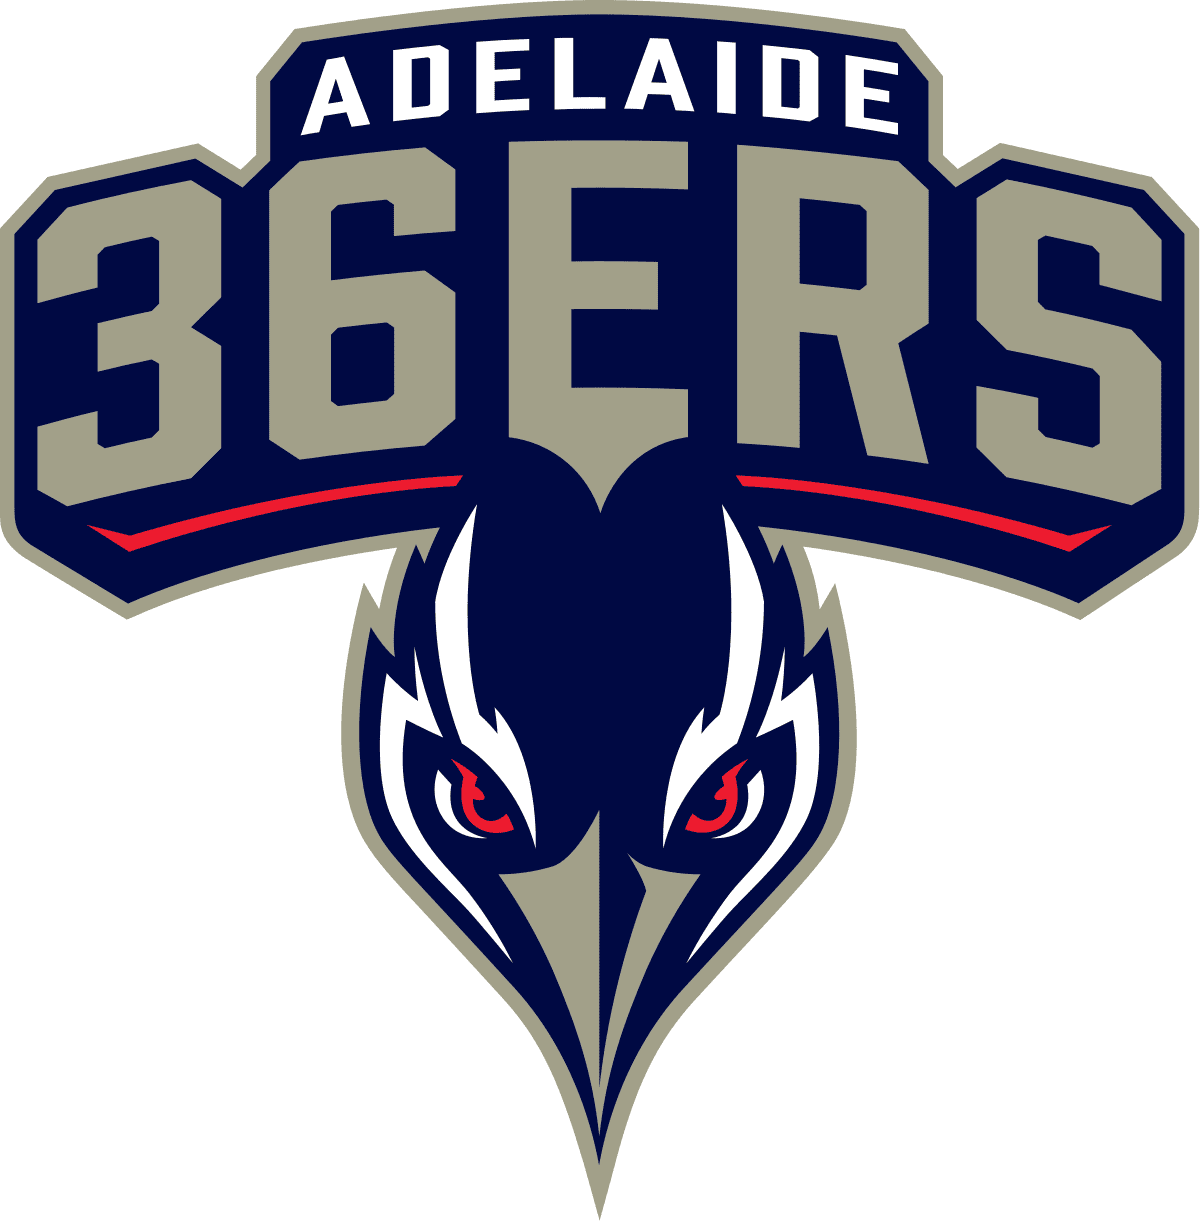 Adelaide 36ers logo